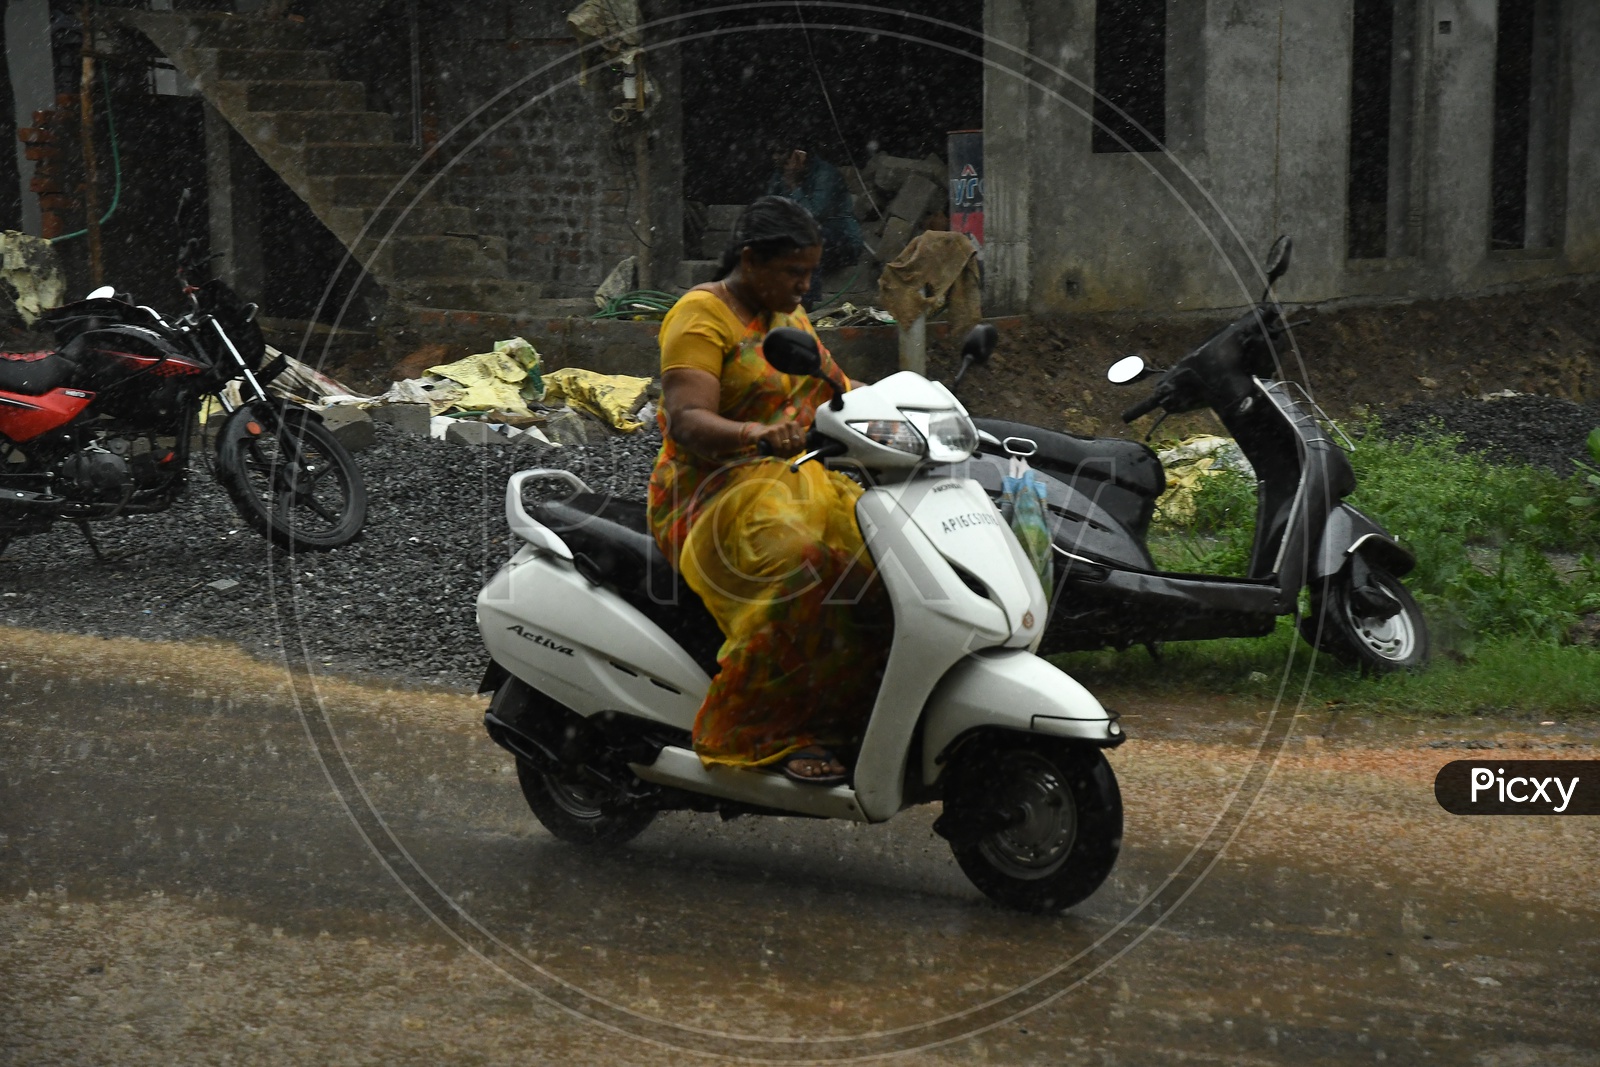 A Woman Bike Commuter Riding in Rain on Urban City Roads